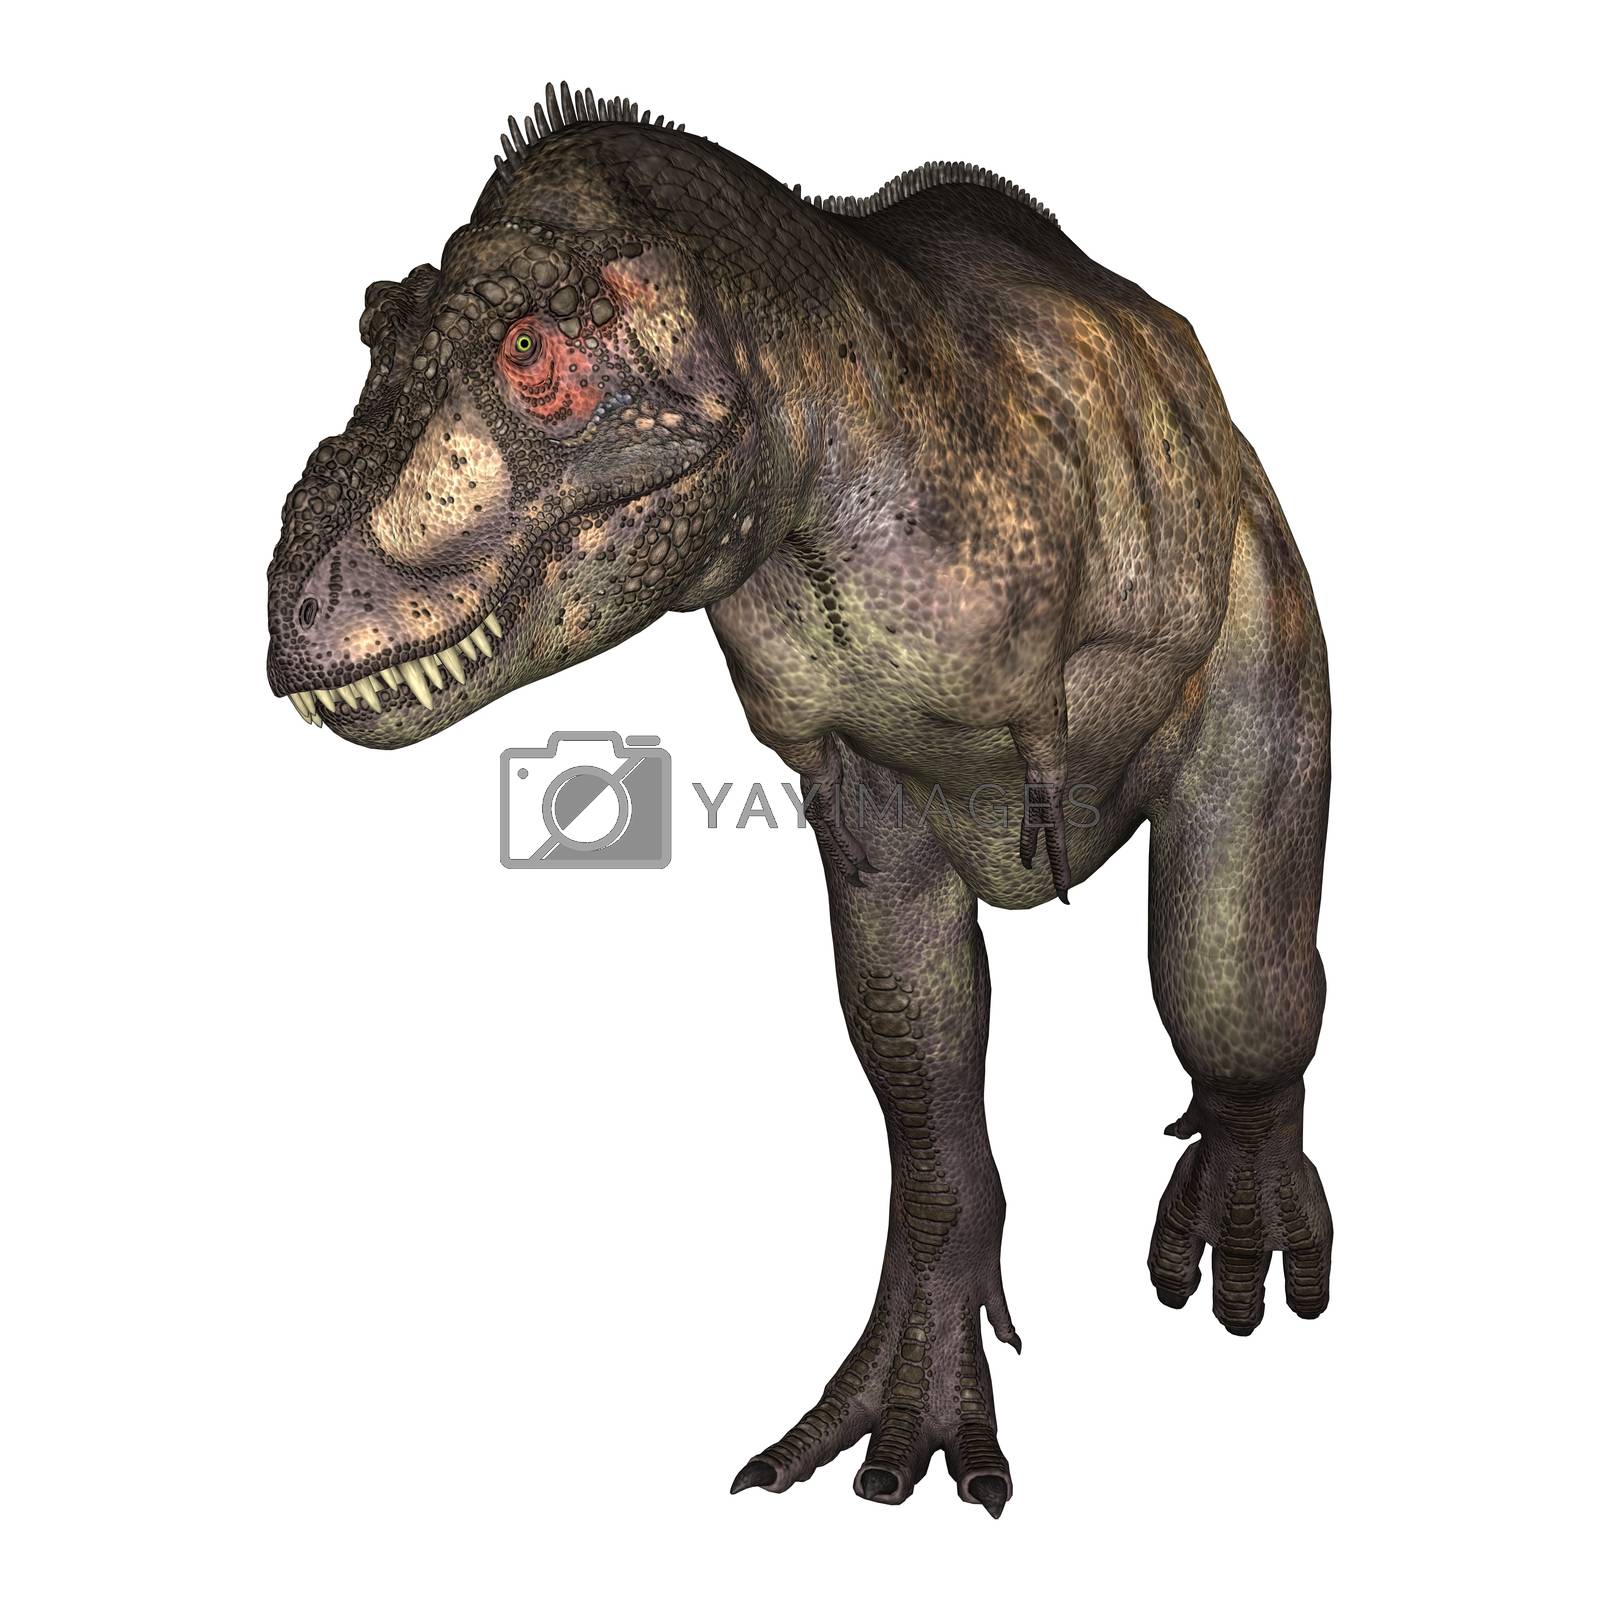 Royalty free image of Dinosaur Tyrannosaurus by Vac